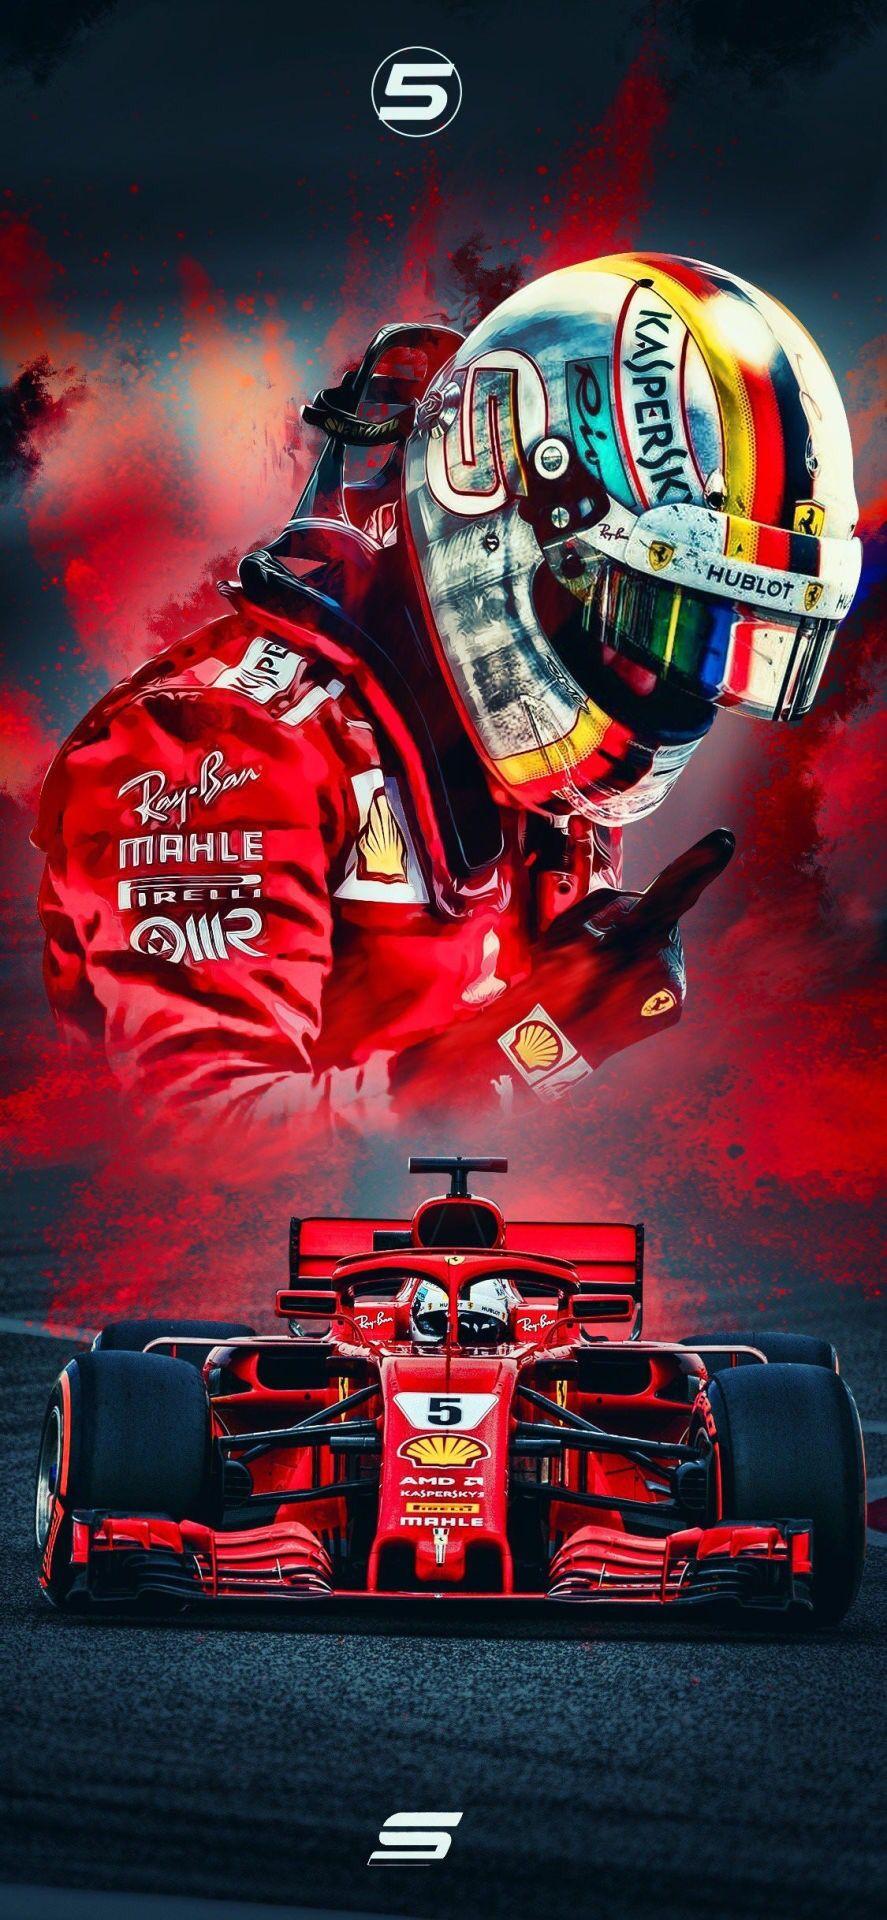 Ferrari F1 2019 Phone Wallpapers - Wallpaper Cave - 887 x 1920 jpeg 256kB